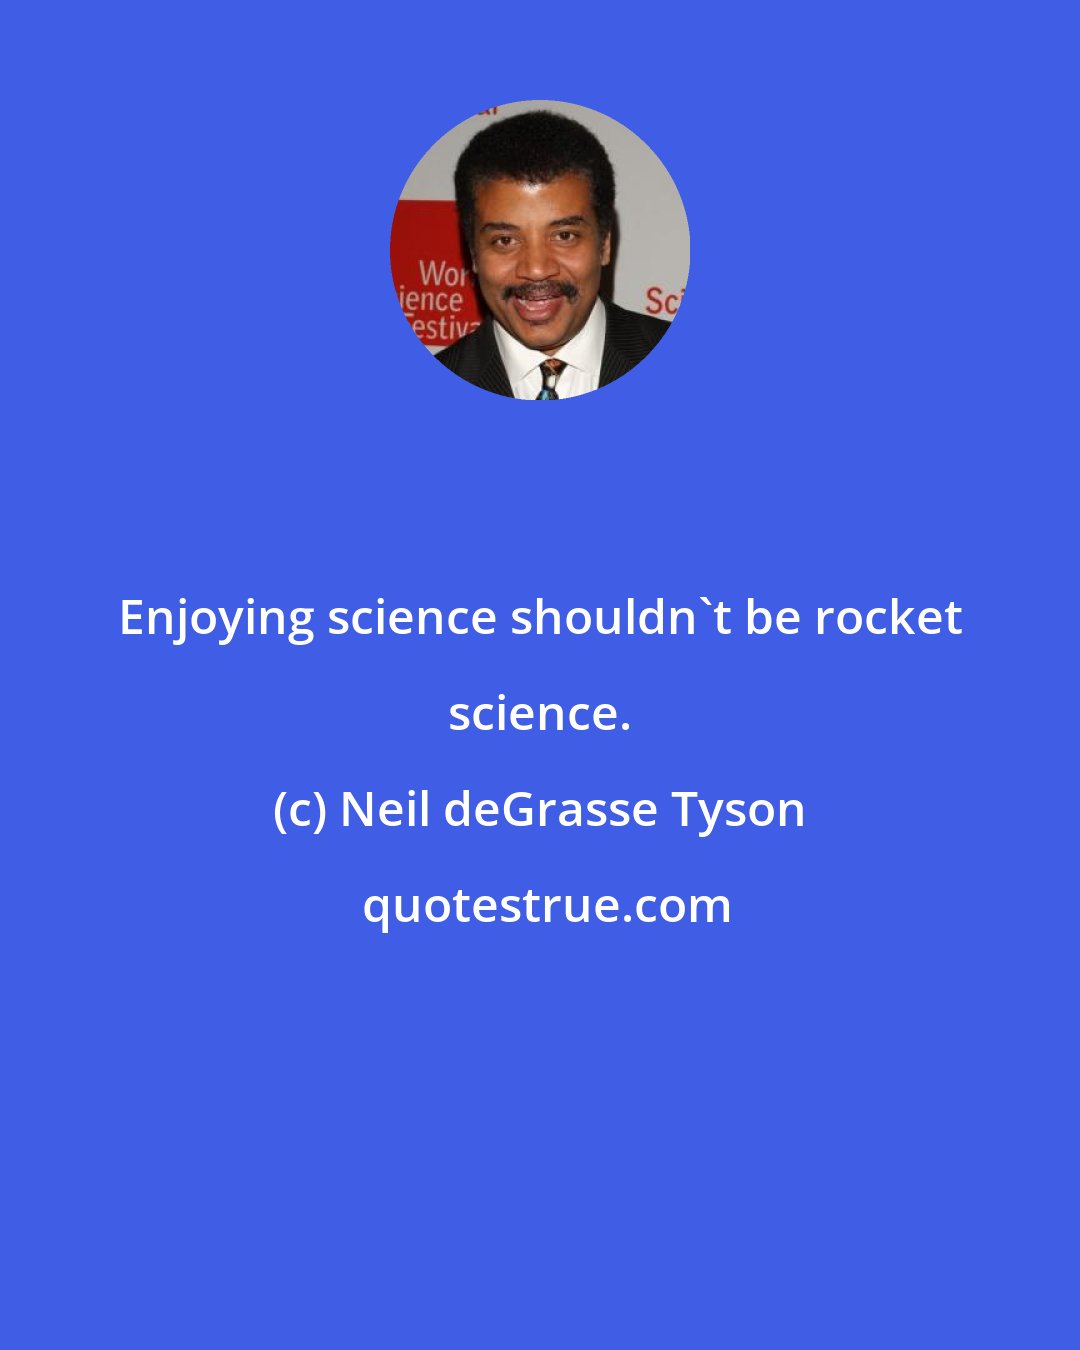 Neil deGrasse Tyson: Enjoying science shouldn't be rocket science.